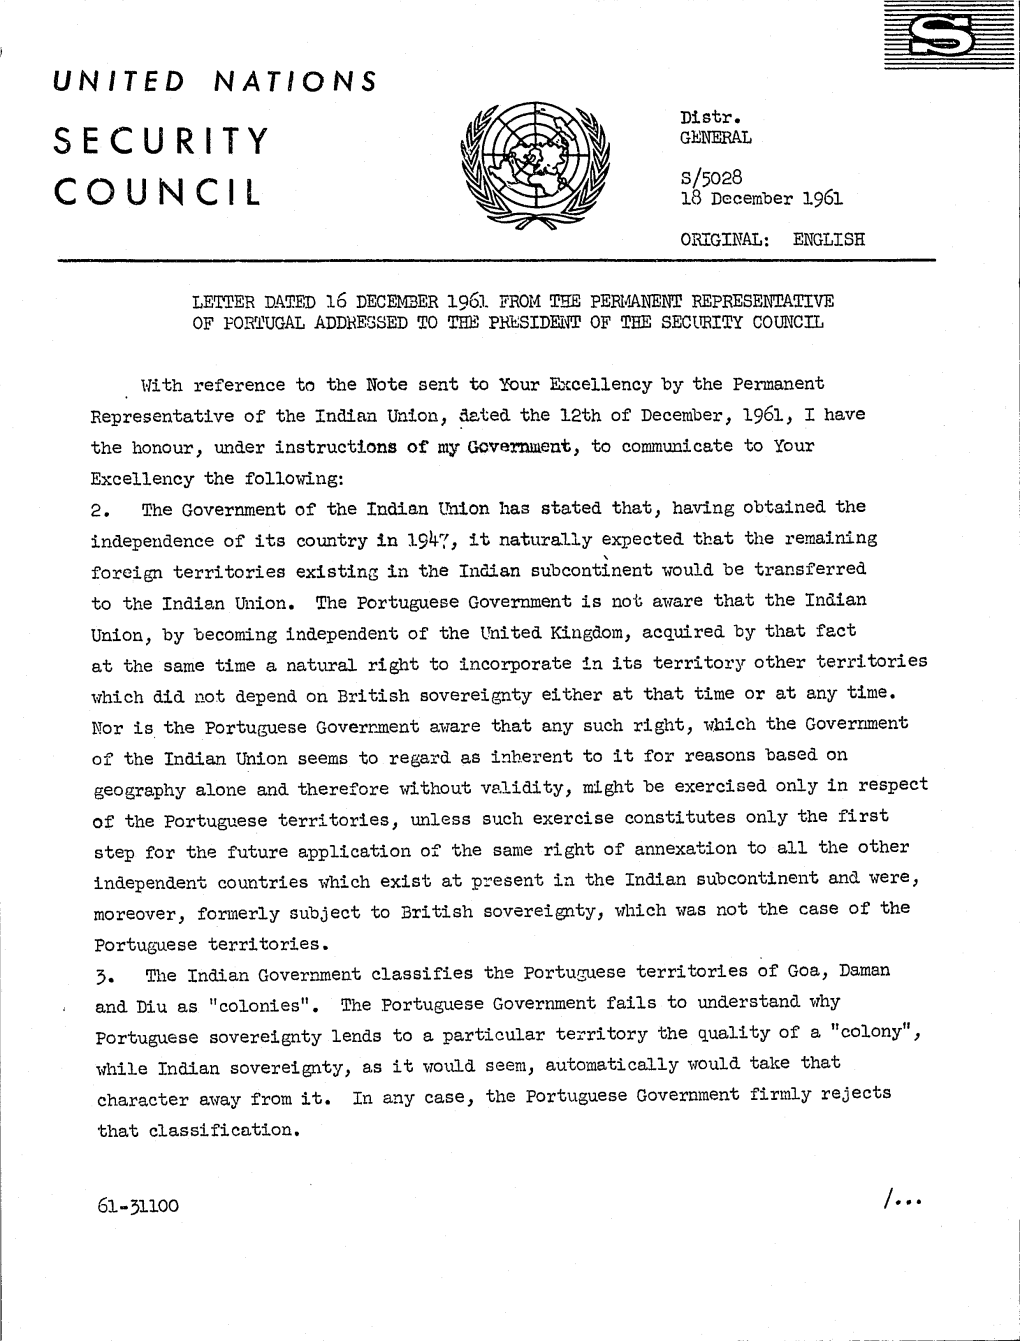 SECURITY G:Blneral 8/5028 COUNCIL 18 December 1961